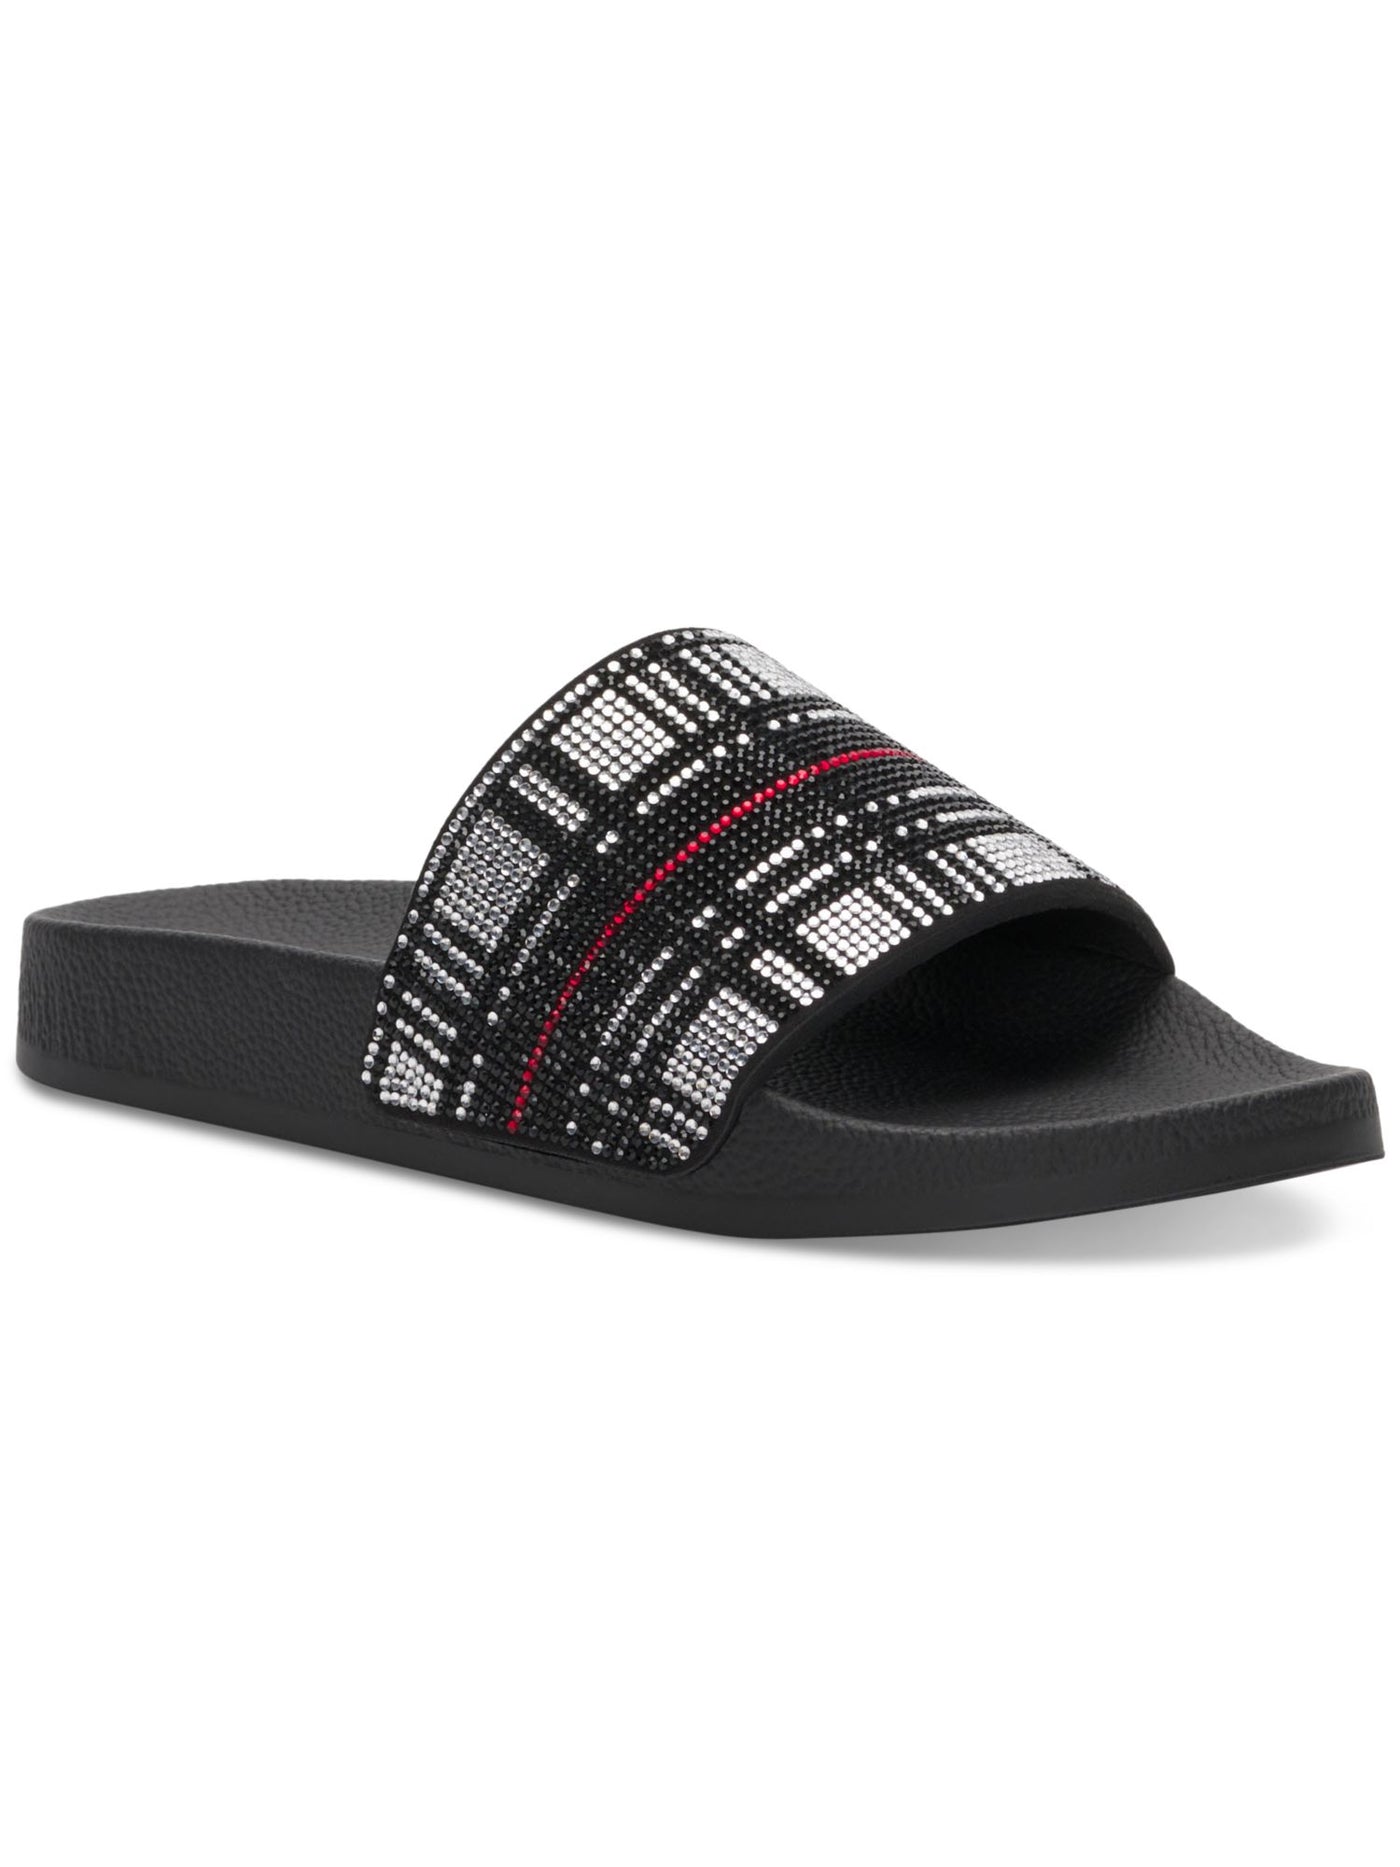 INC Womens Black Glittering Rhinestone Embellished Peymin Round Toe Slip On Slide Sandals Shoes 6 M